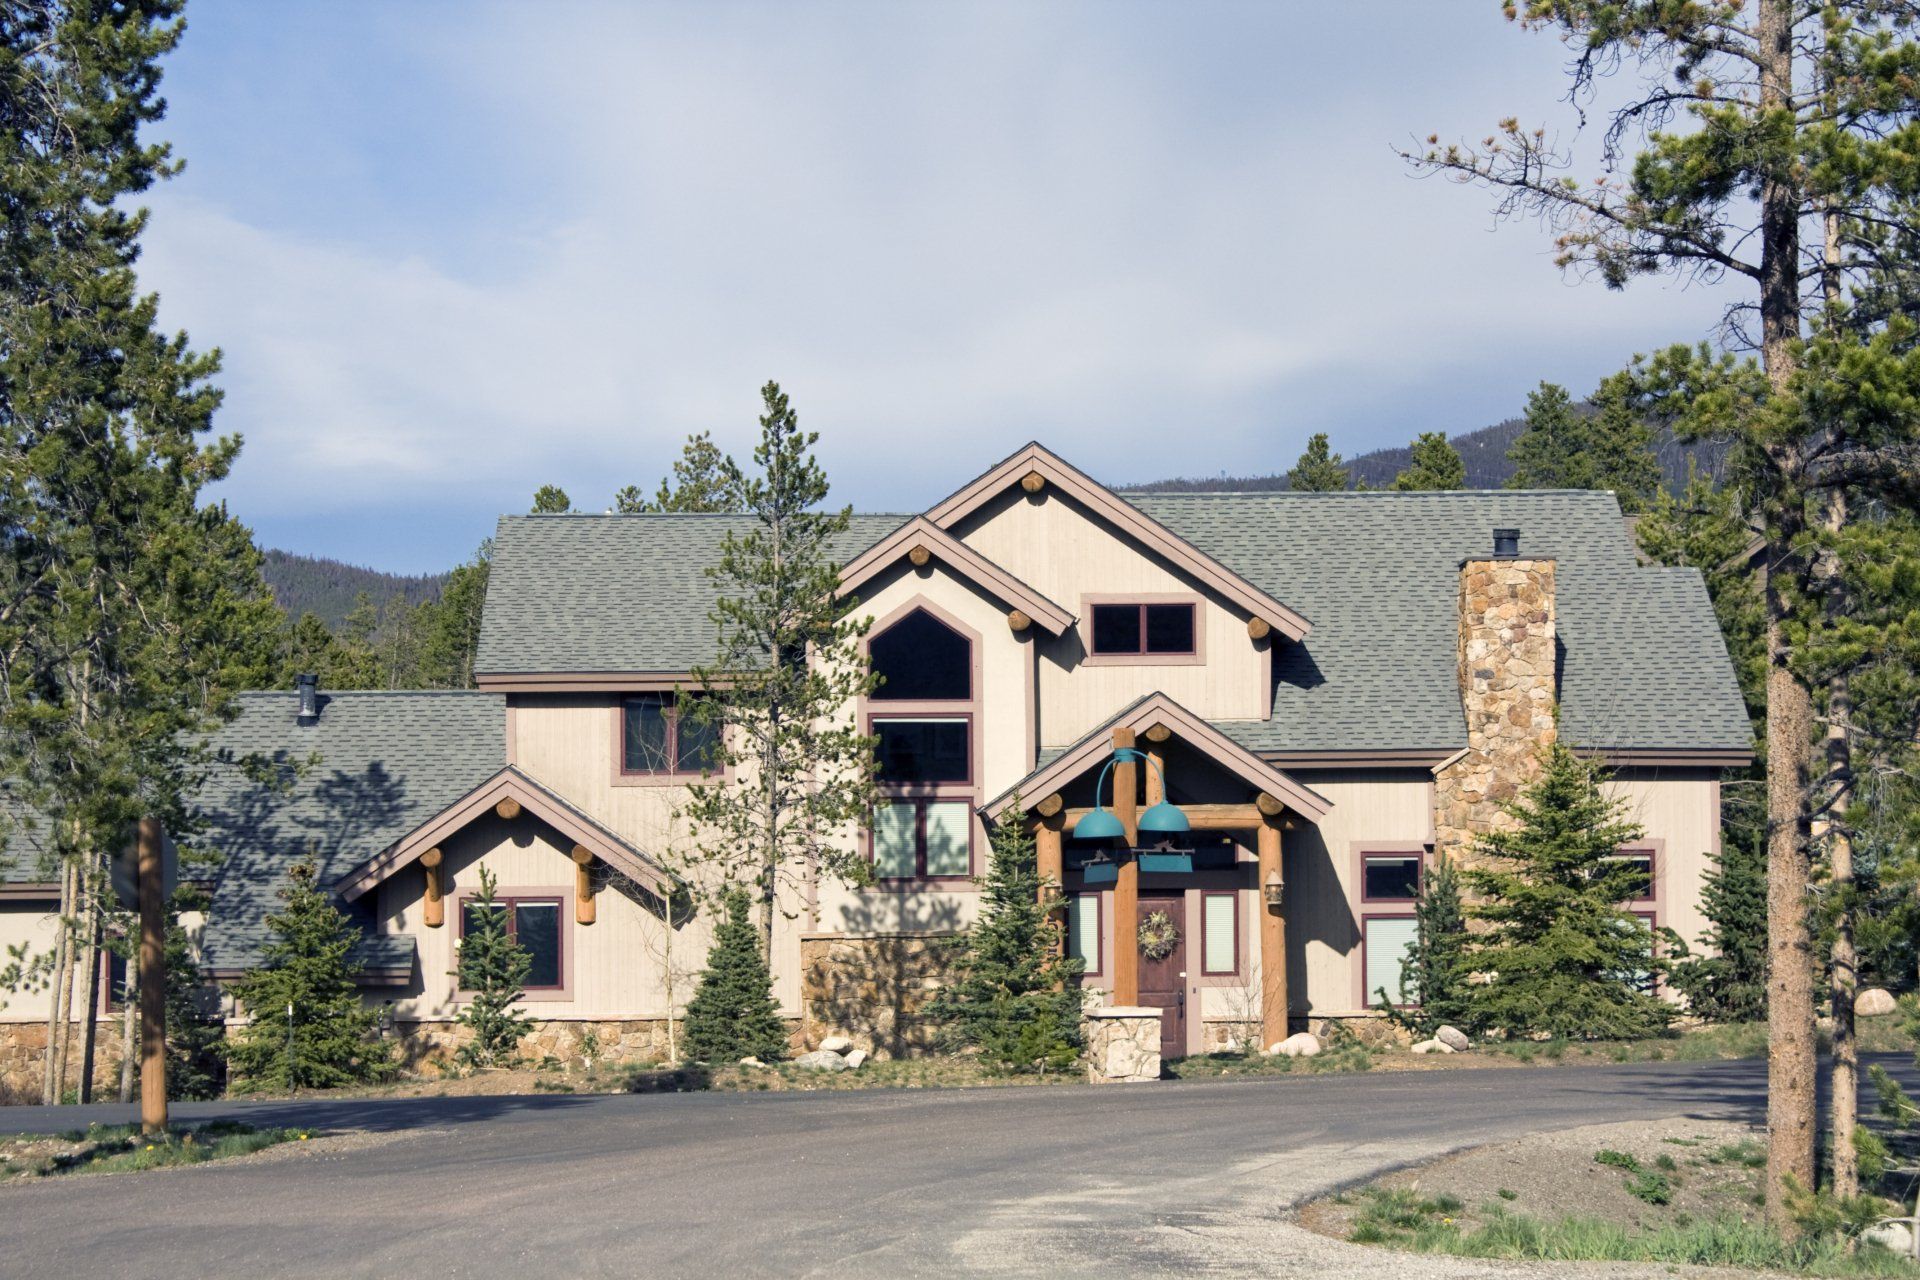 Colorado Home with Tinted Windows